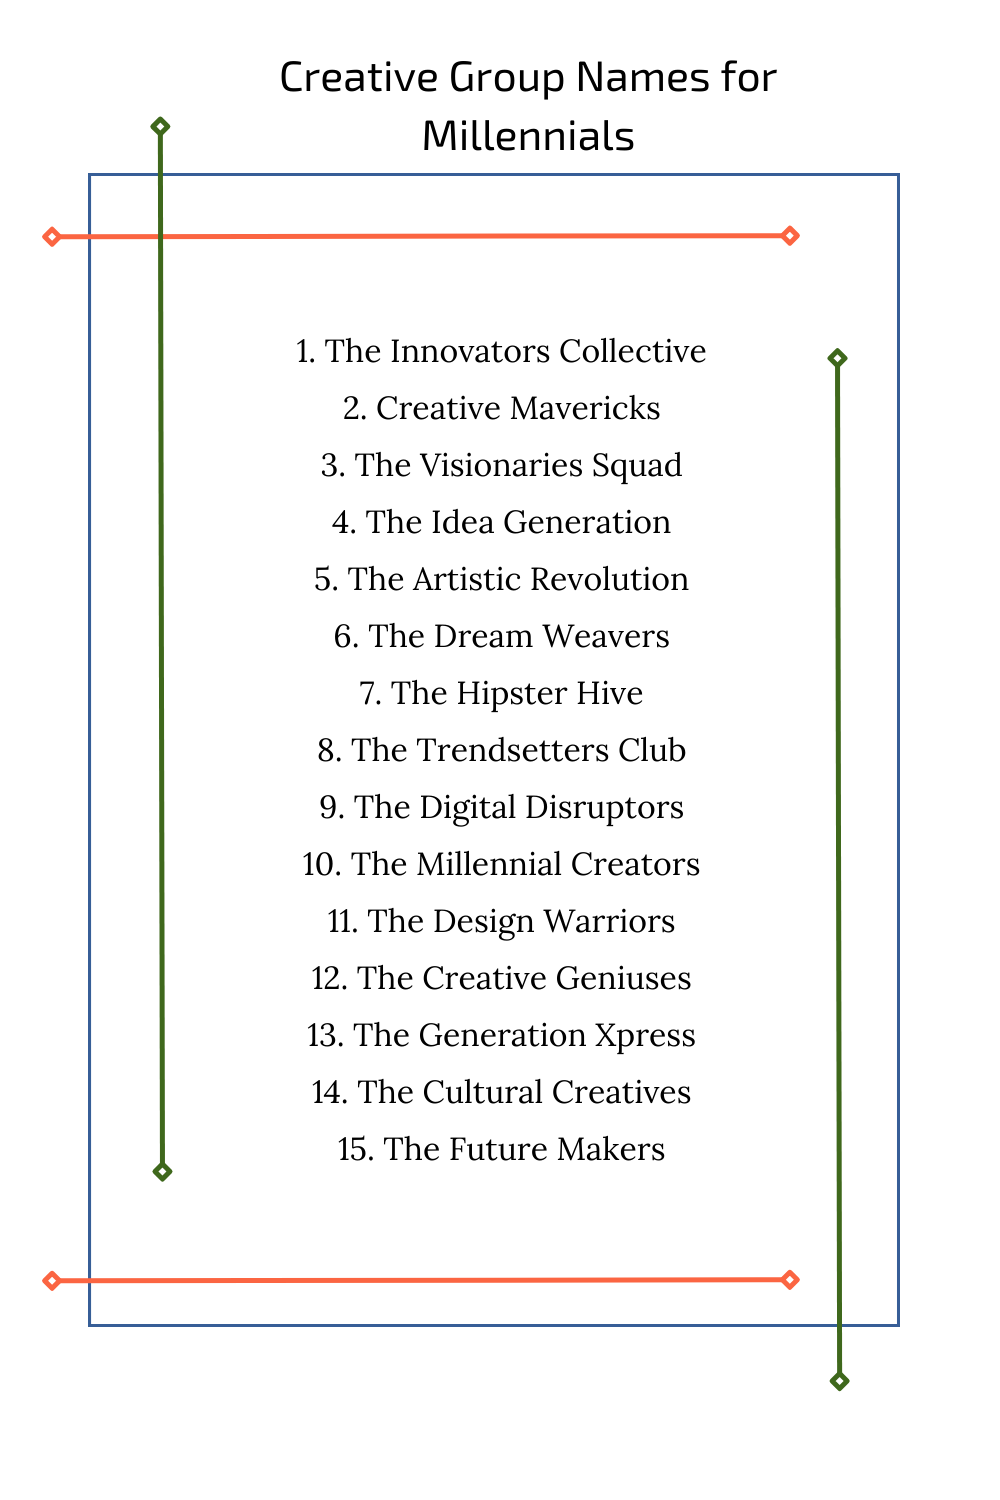 Creative Group Names for Millennials